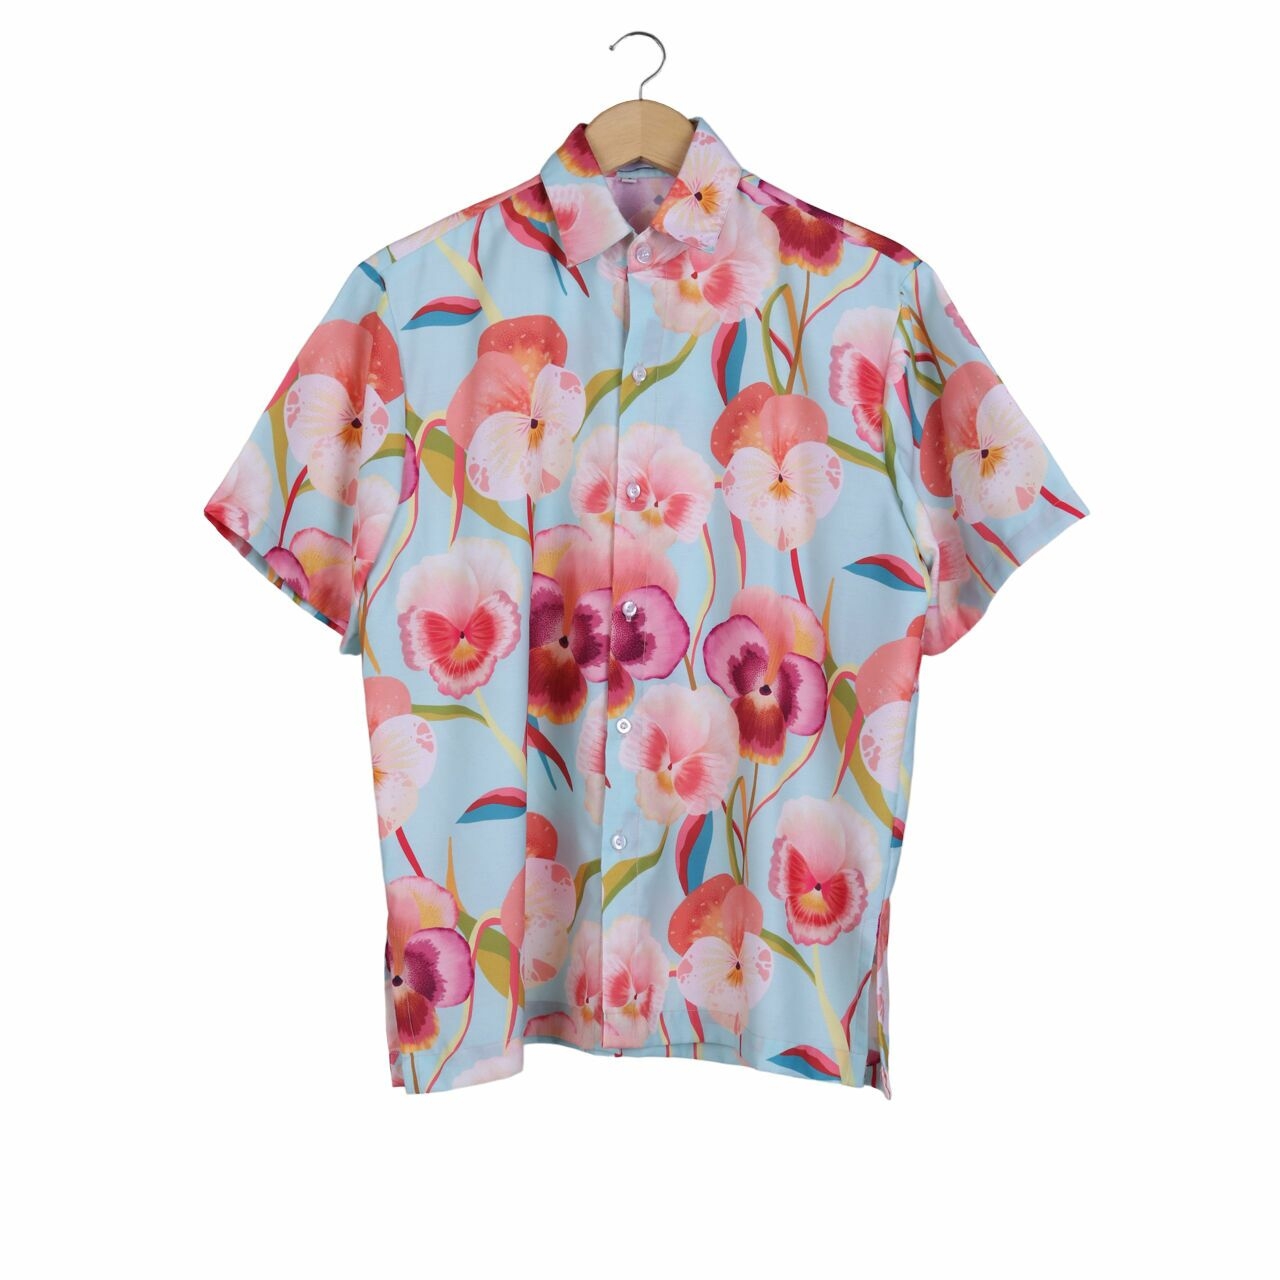 K.A.L.A studio x Mader Tosca Floral Shirt